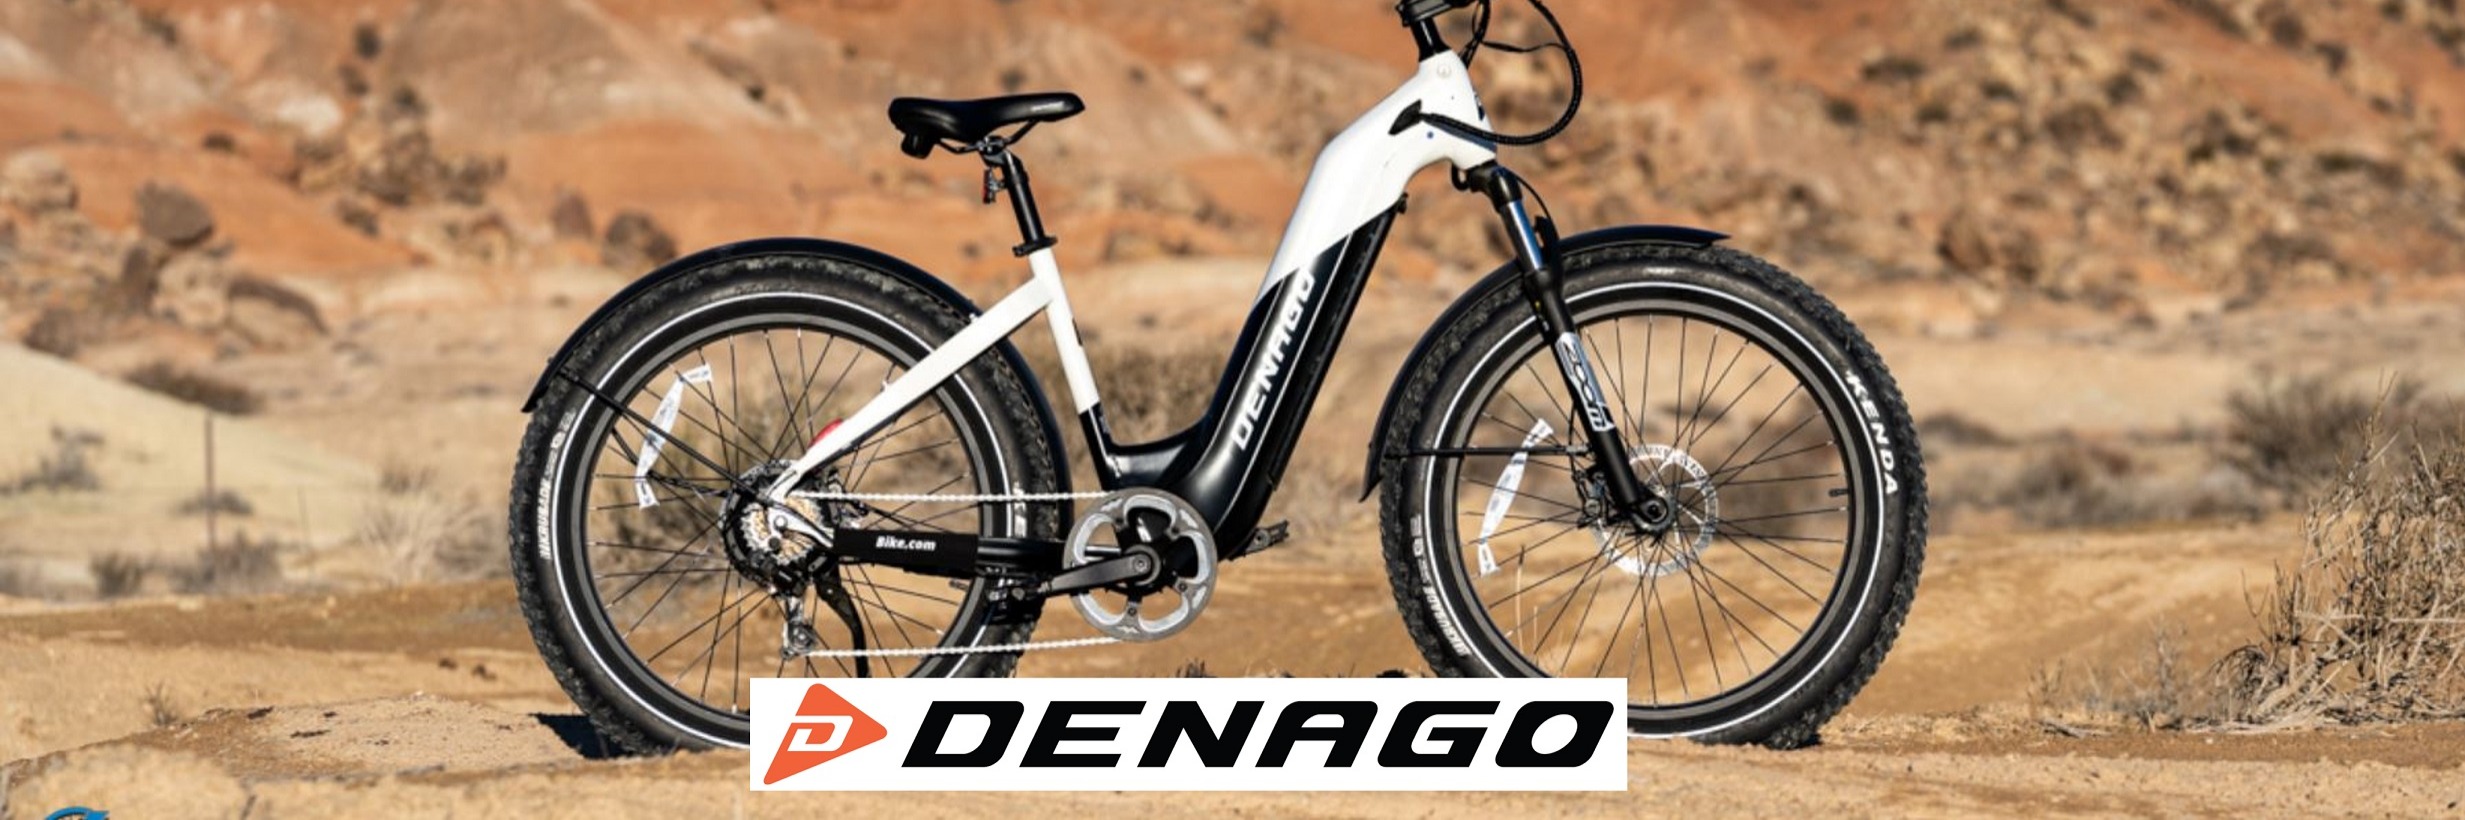 Denago E-bikes - Electric Bike Report